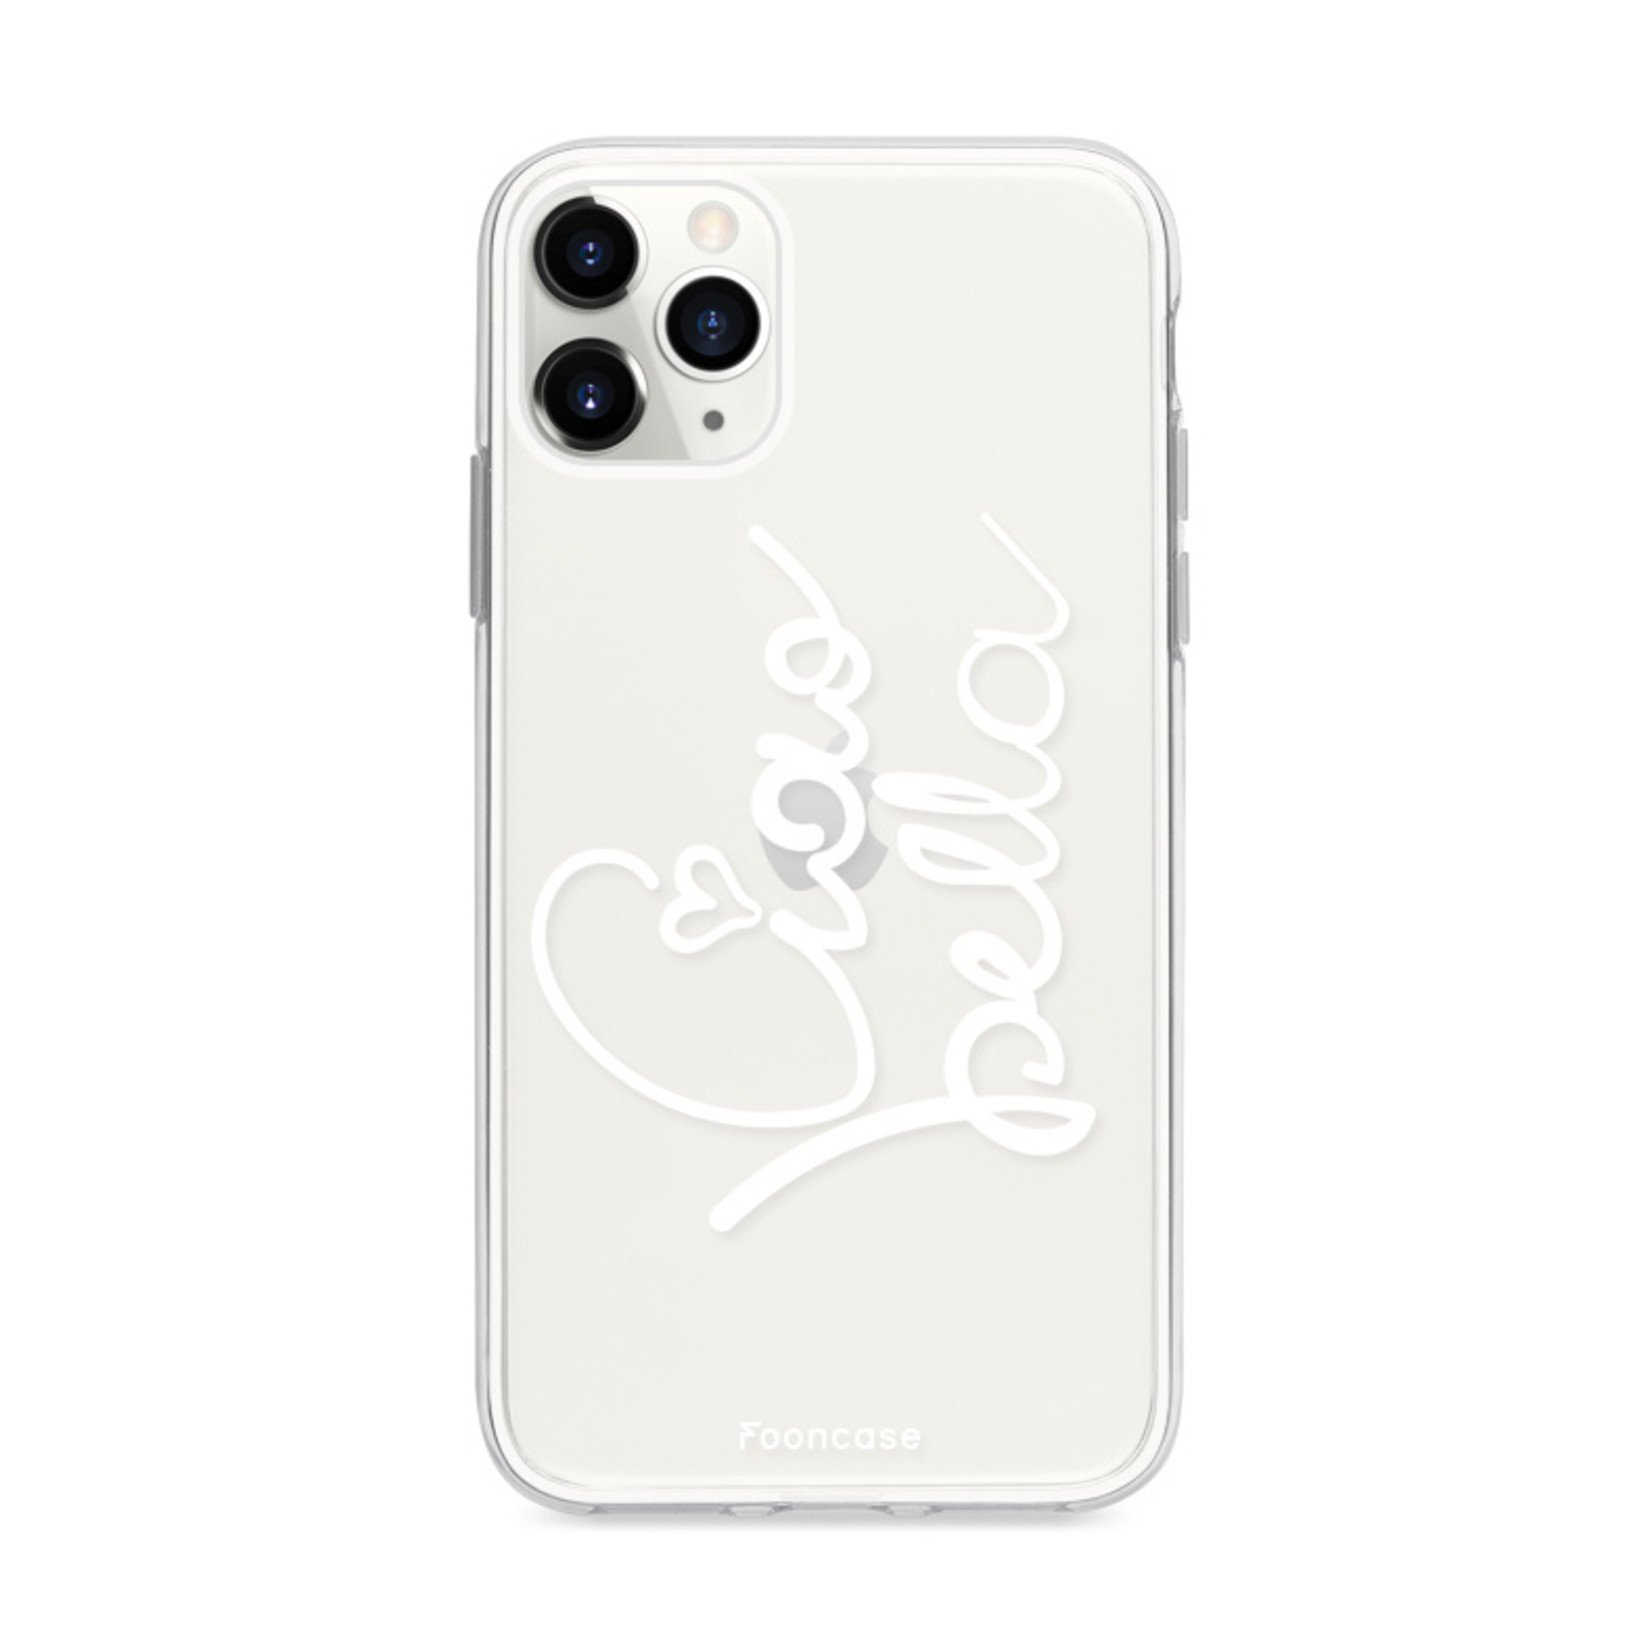 FOONCASE IPhone 12 Pro Max Case - Ciao Bella!